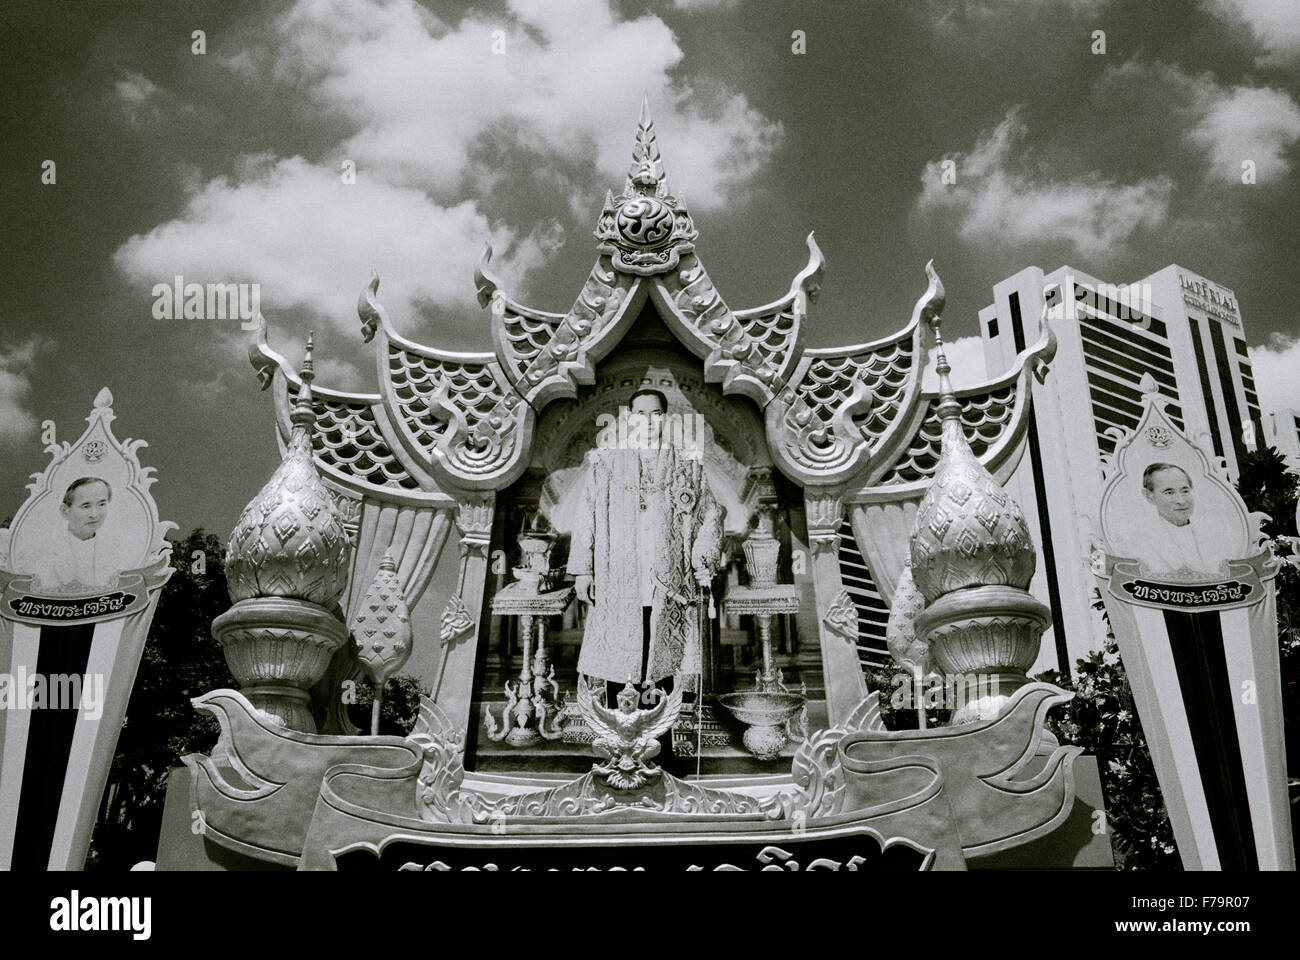 Cultura tradizionale thailandese arte del re Bhumibol Adulyadej in Sukhumvit di Bangkok in Thailandia in estremo oriente Asia sudorientale. thai monarchia di royalty Foto Stock